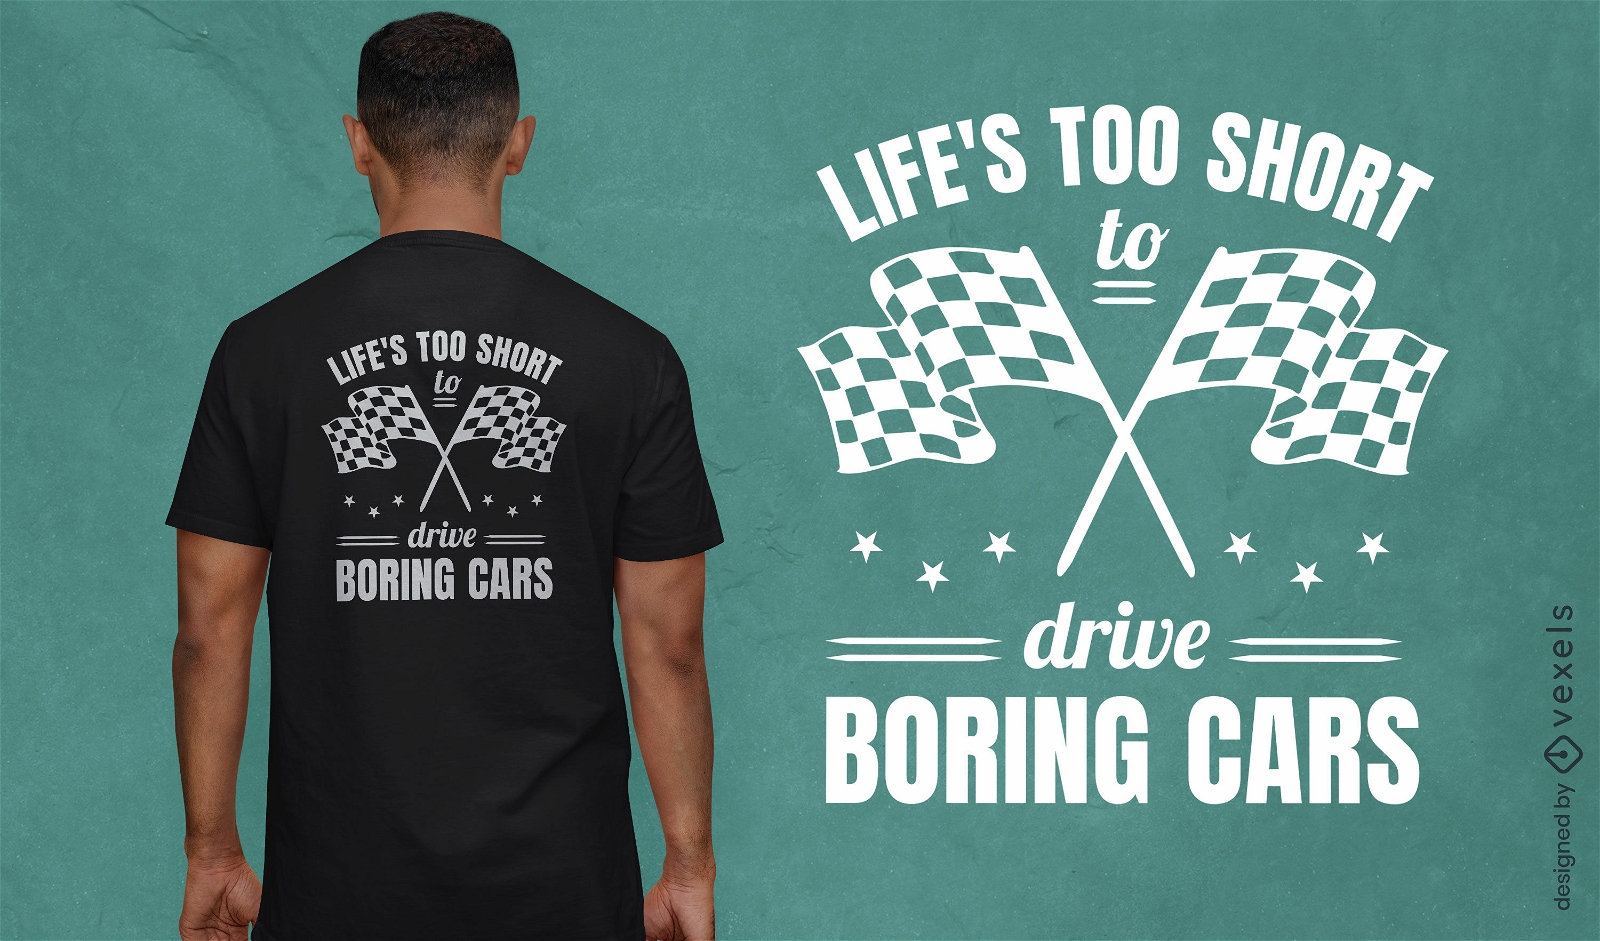 Drive cool cars t-shirt design